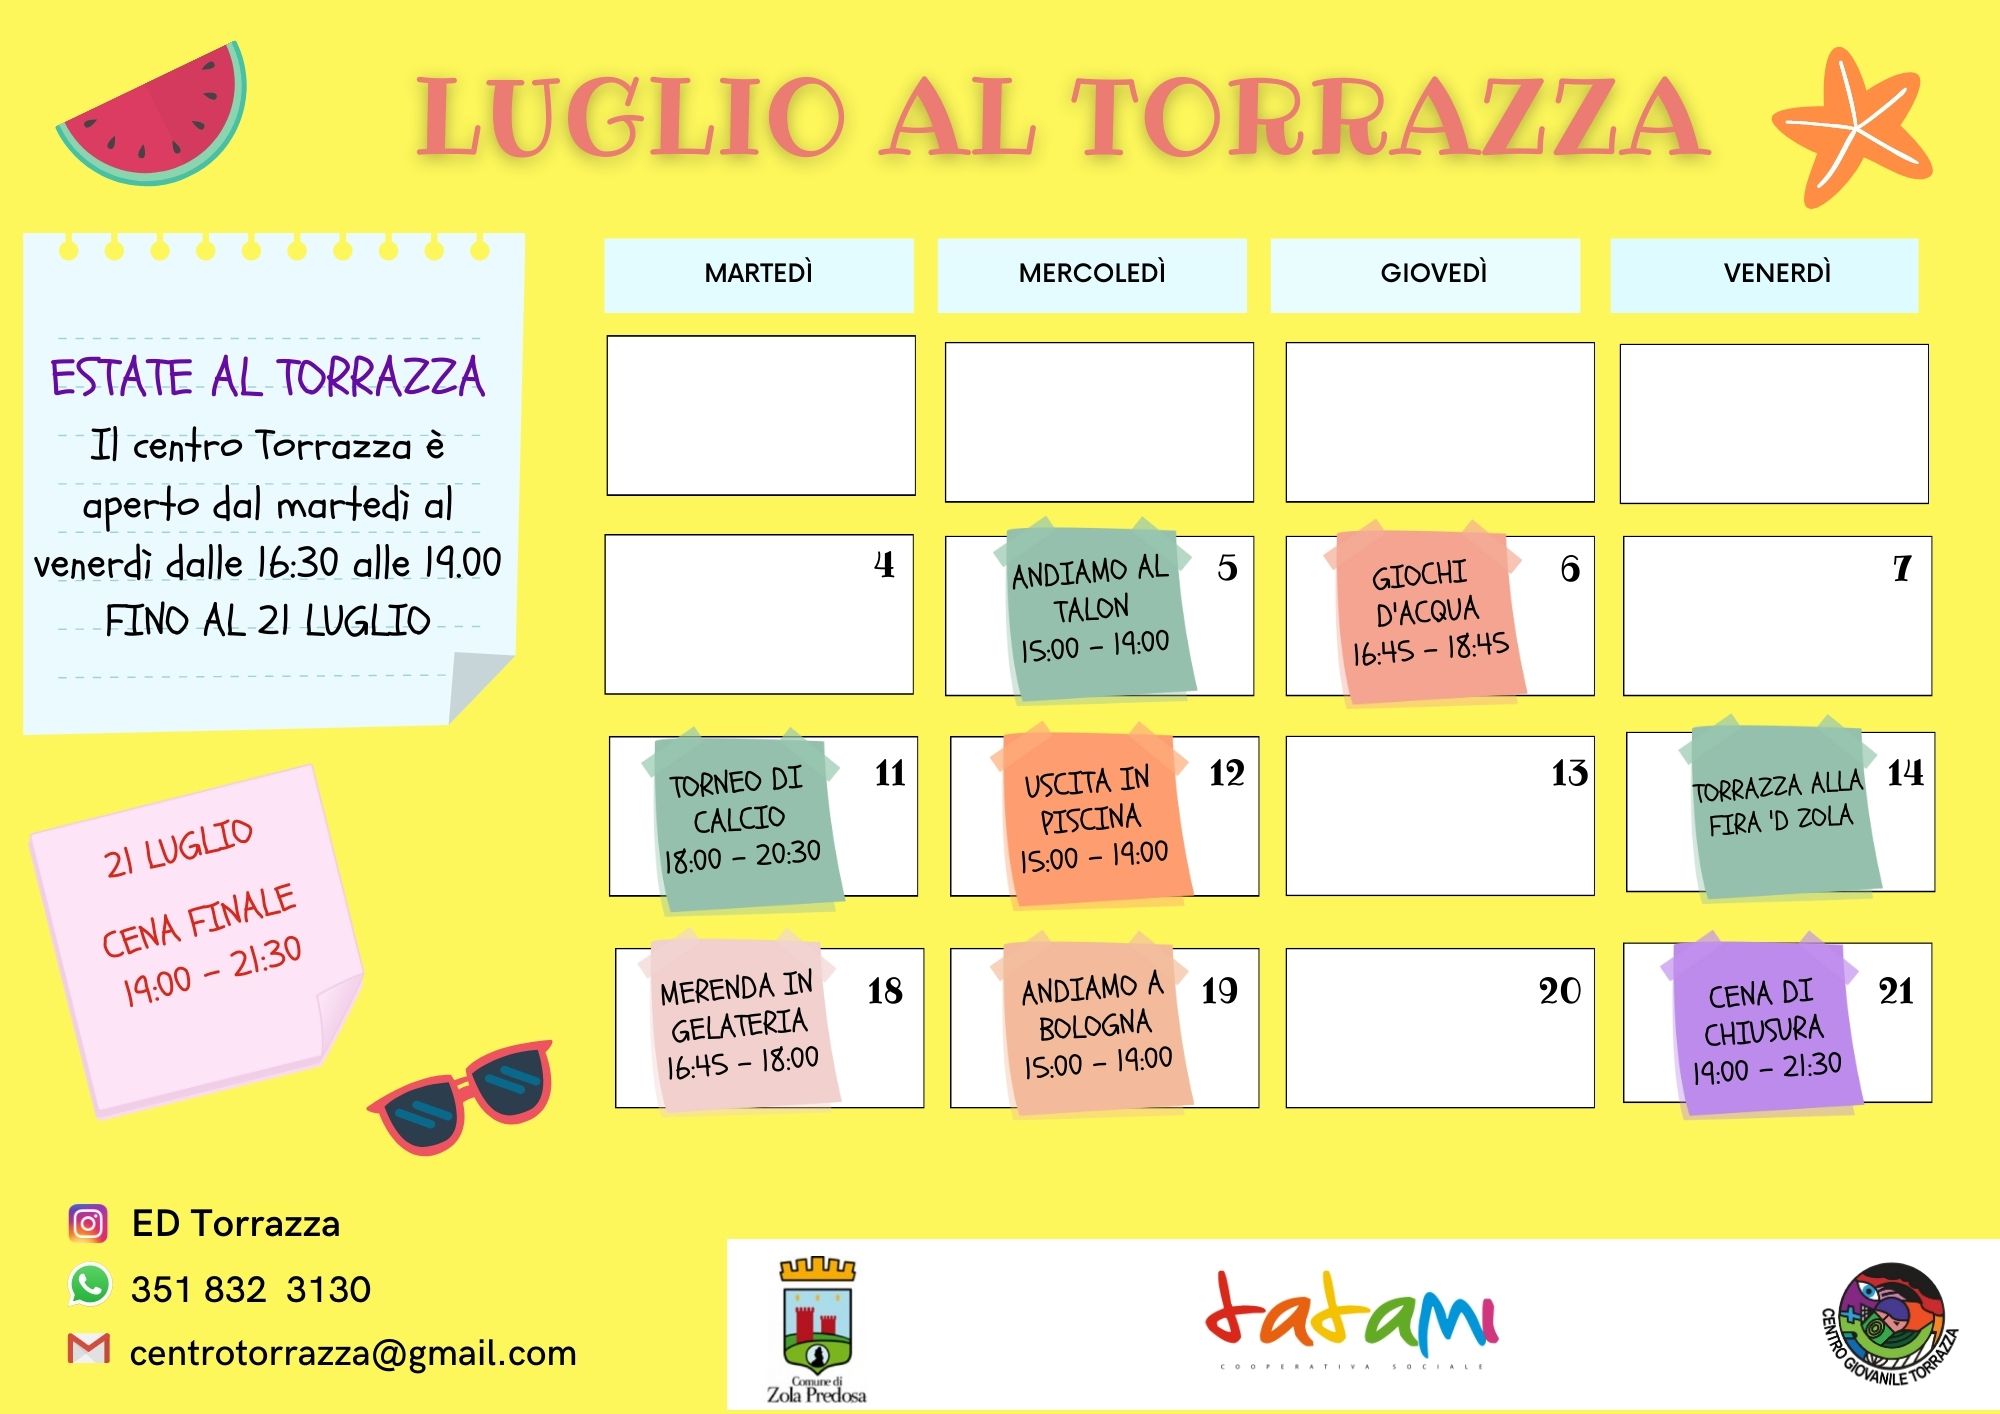 LUGLIO AL TORRAZZA (A4 29,7 x 21 cm).jpg